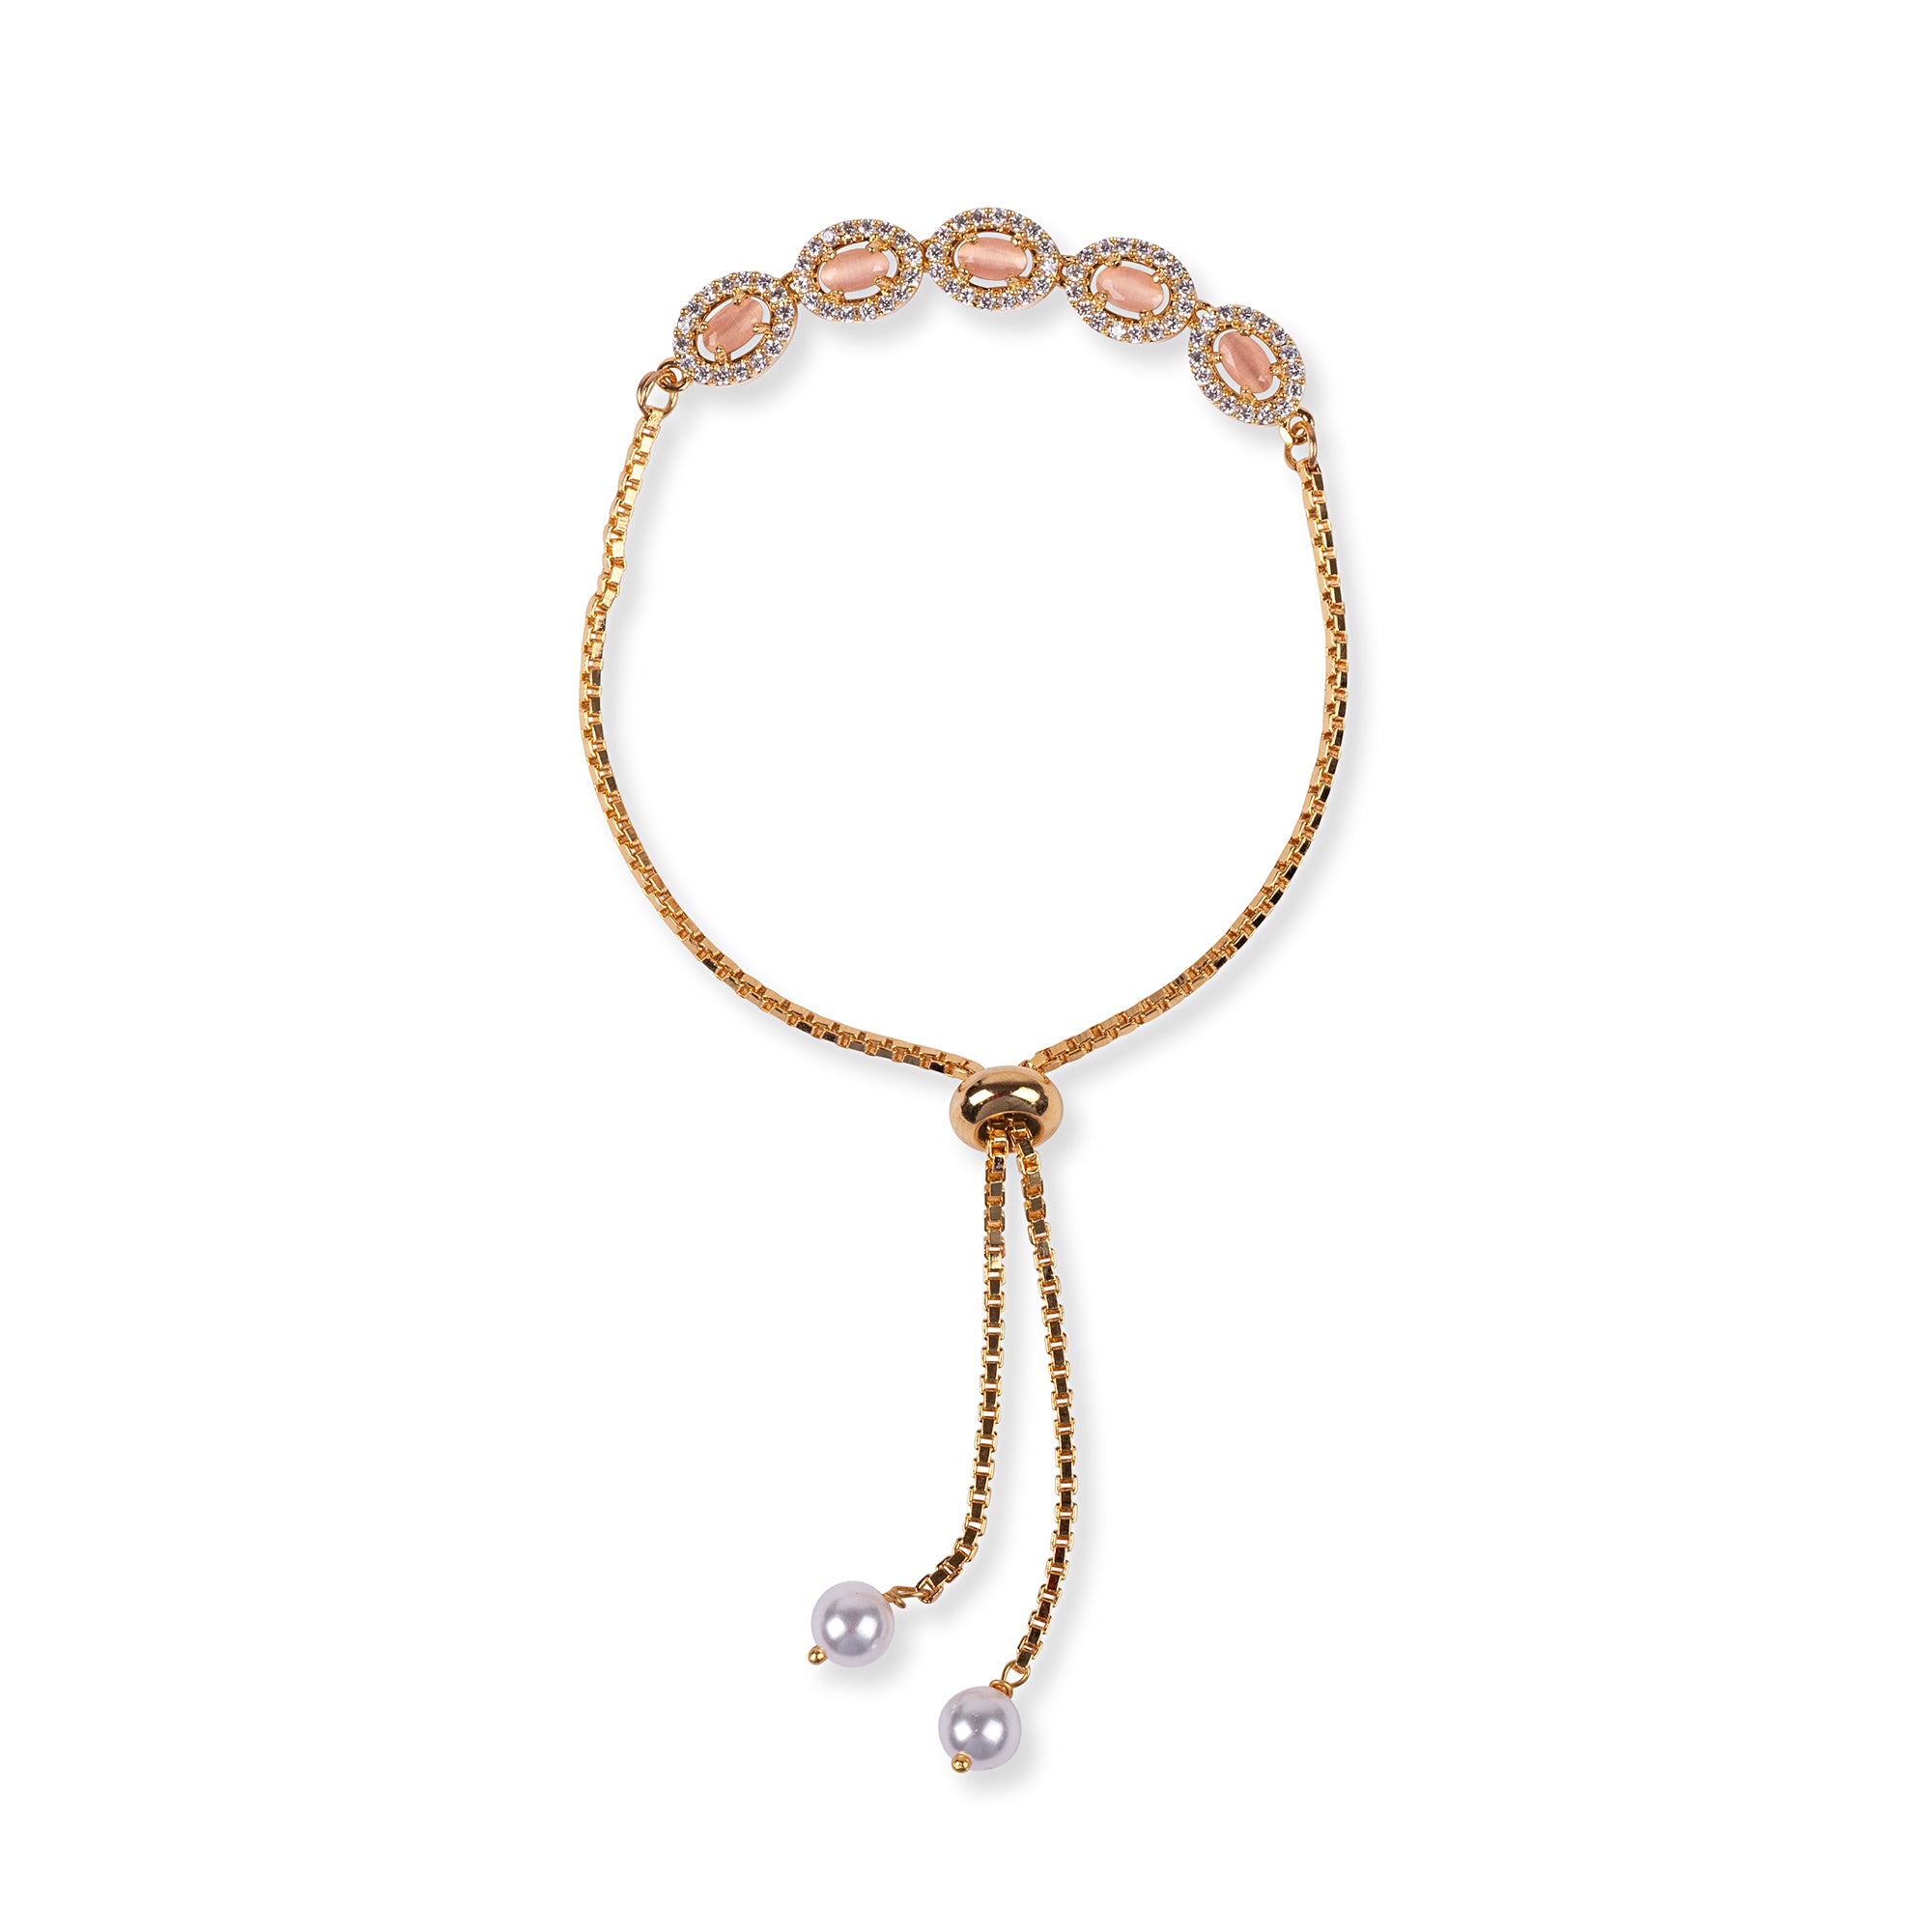 Lola Cubic Zirconia Bracelet in Peach